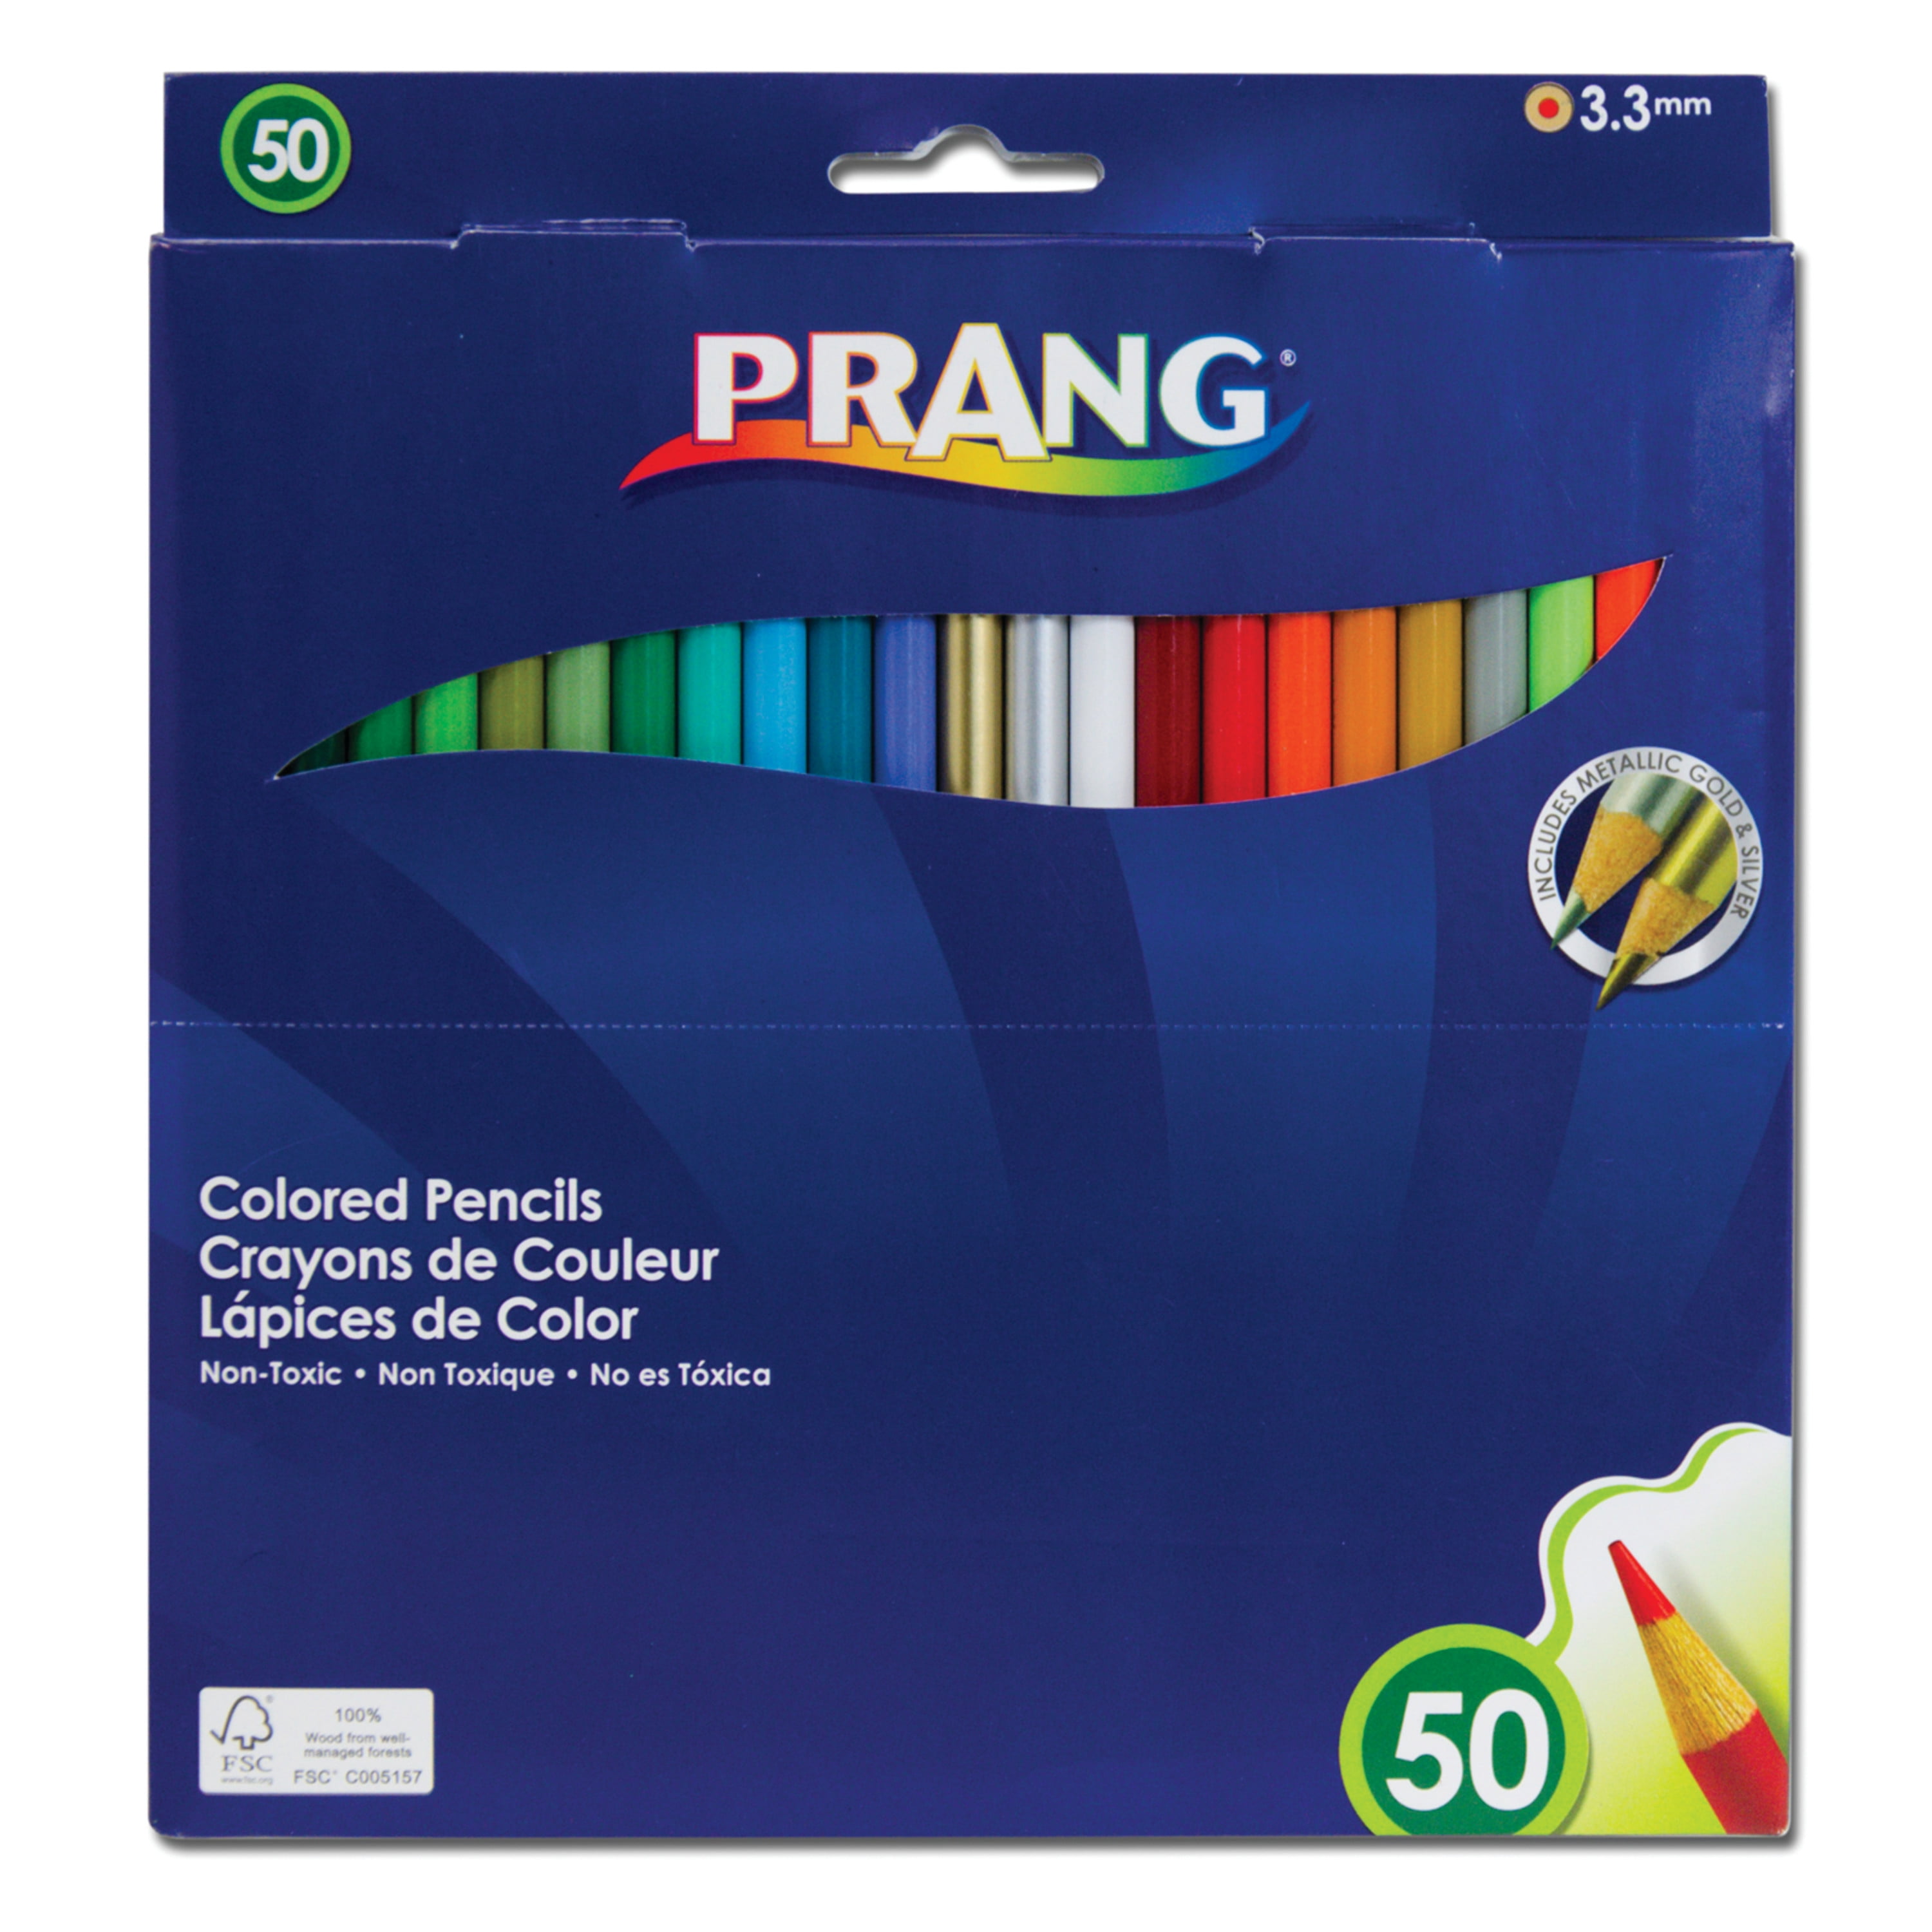 Prang Professional Colored Pencils Set of 54 Vintage